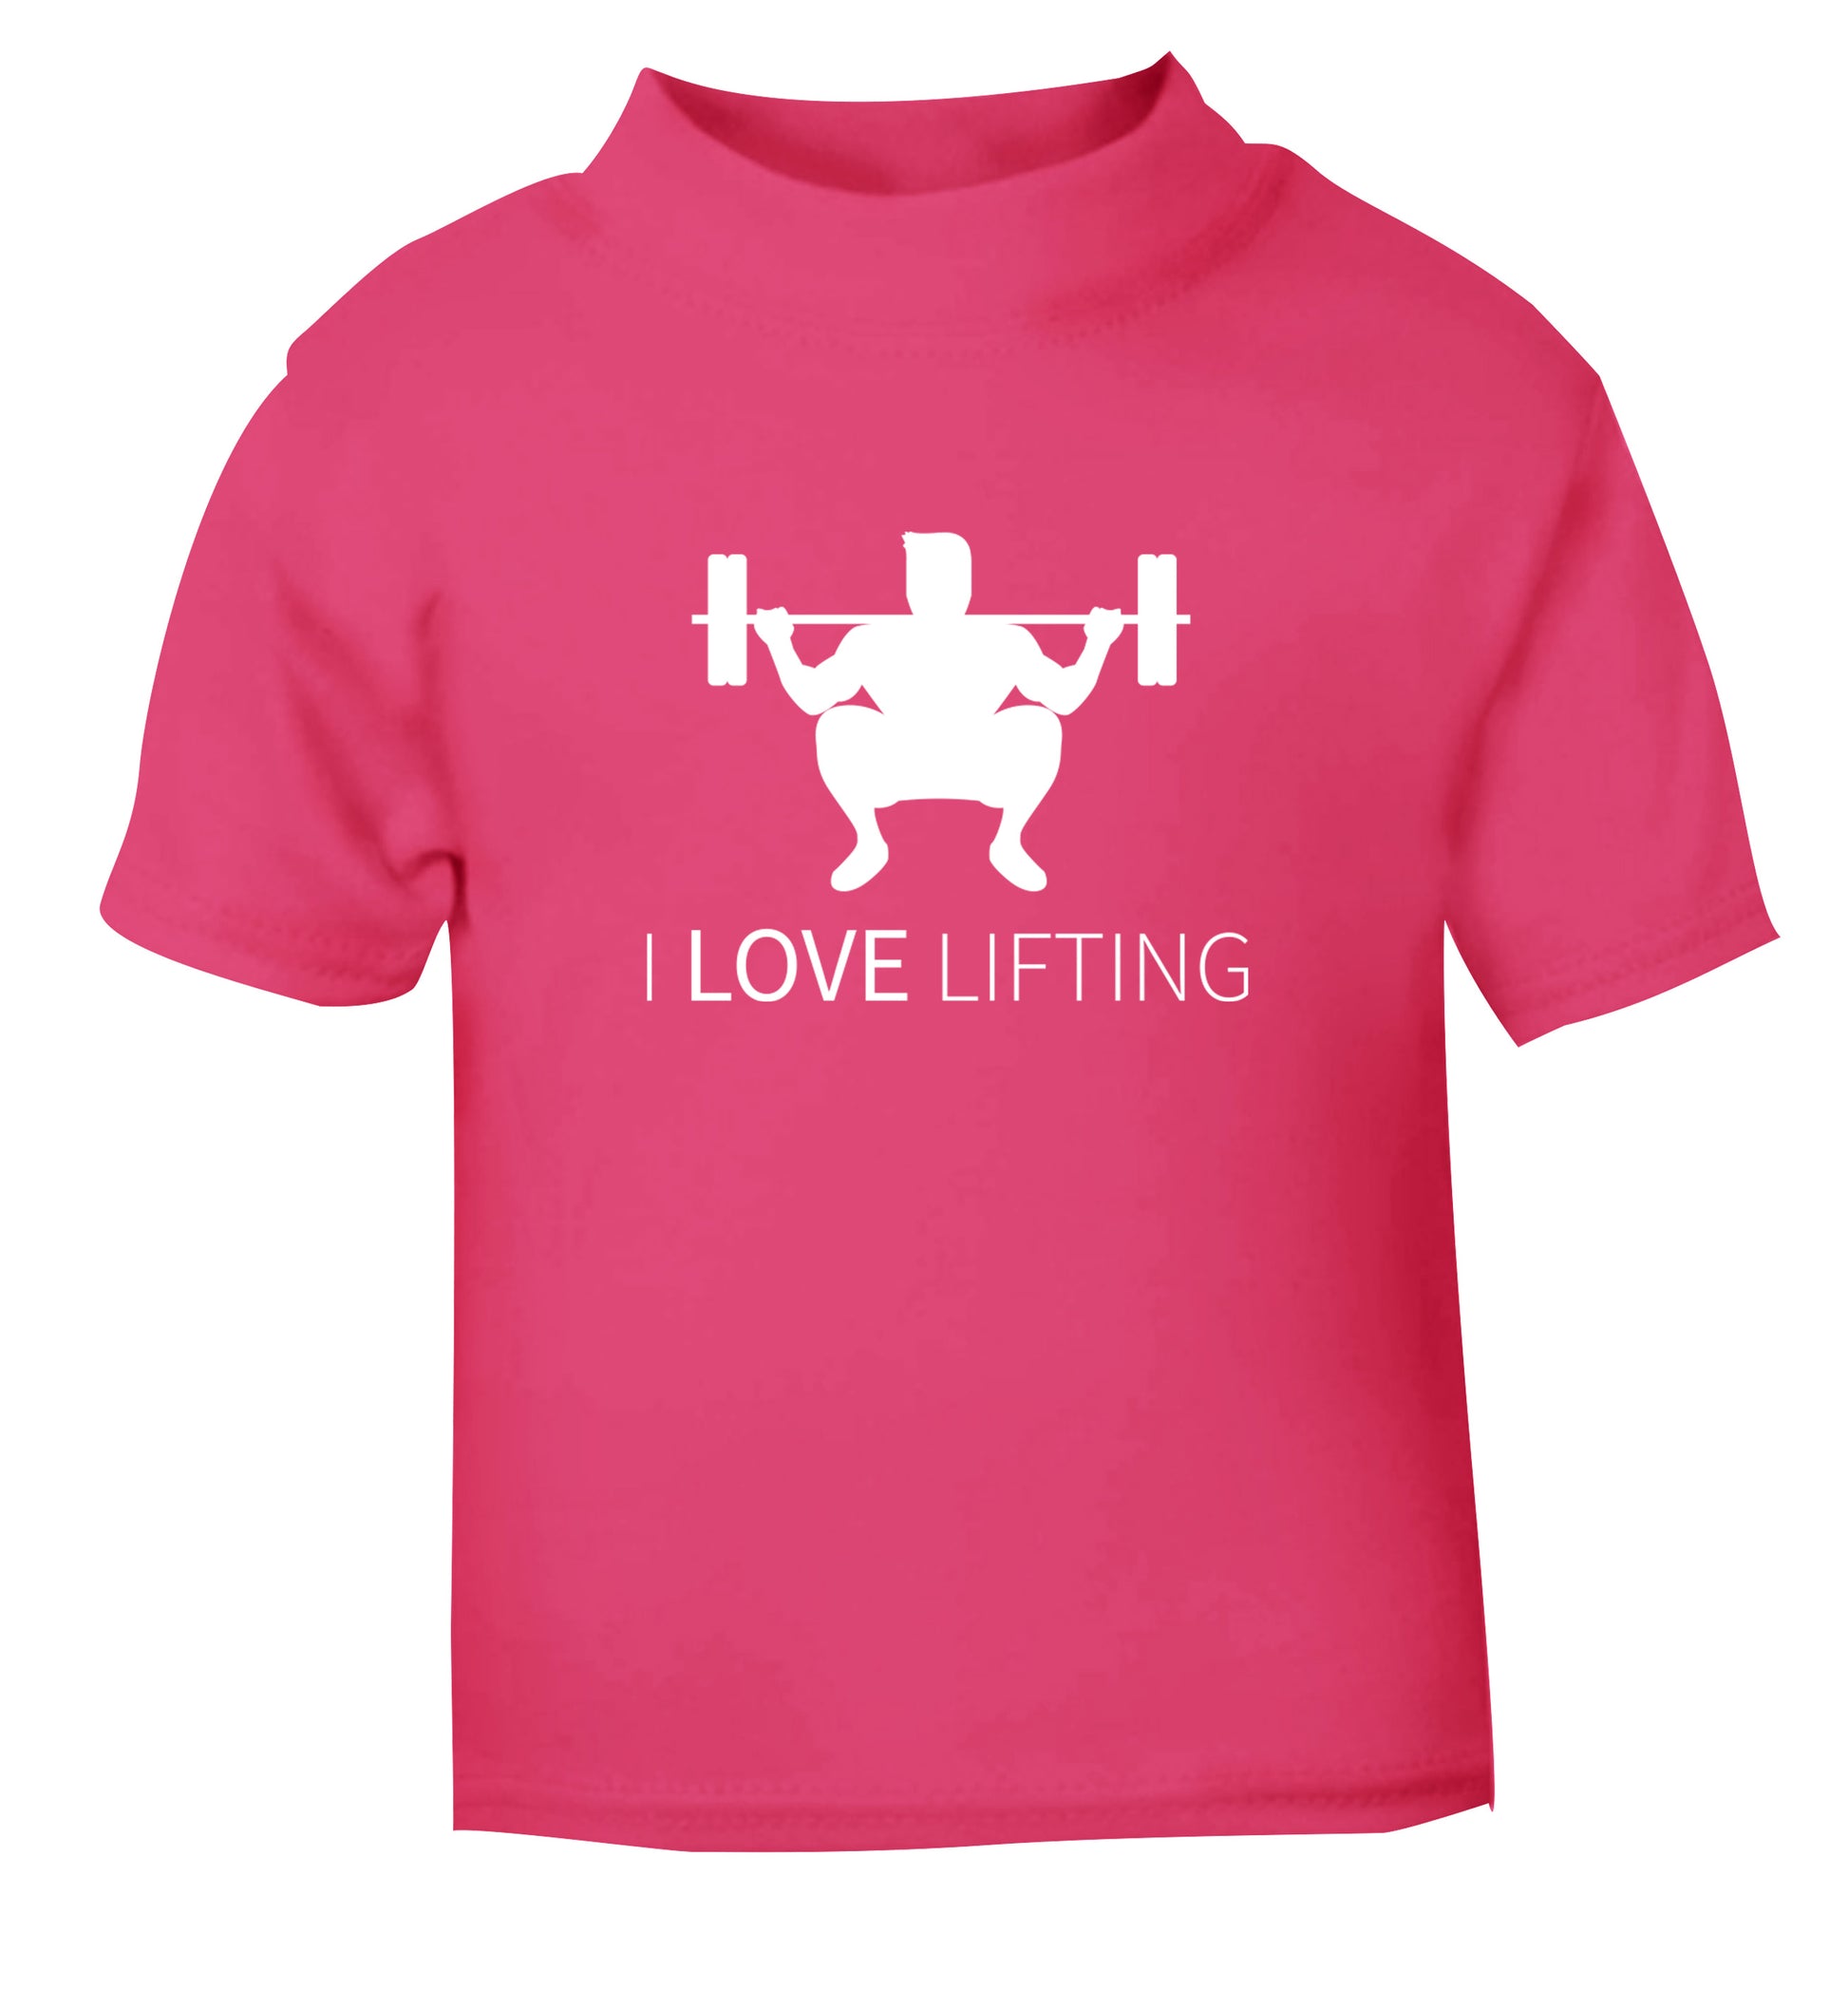 I Love Lifting pink Baby Toddler Tshirt 2 Years